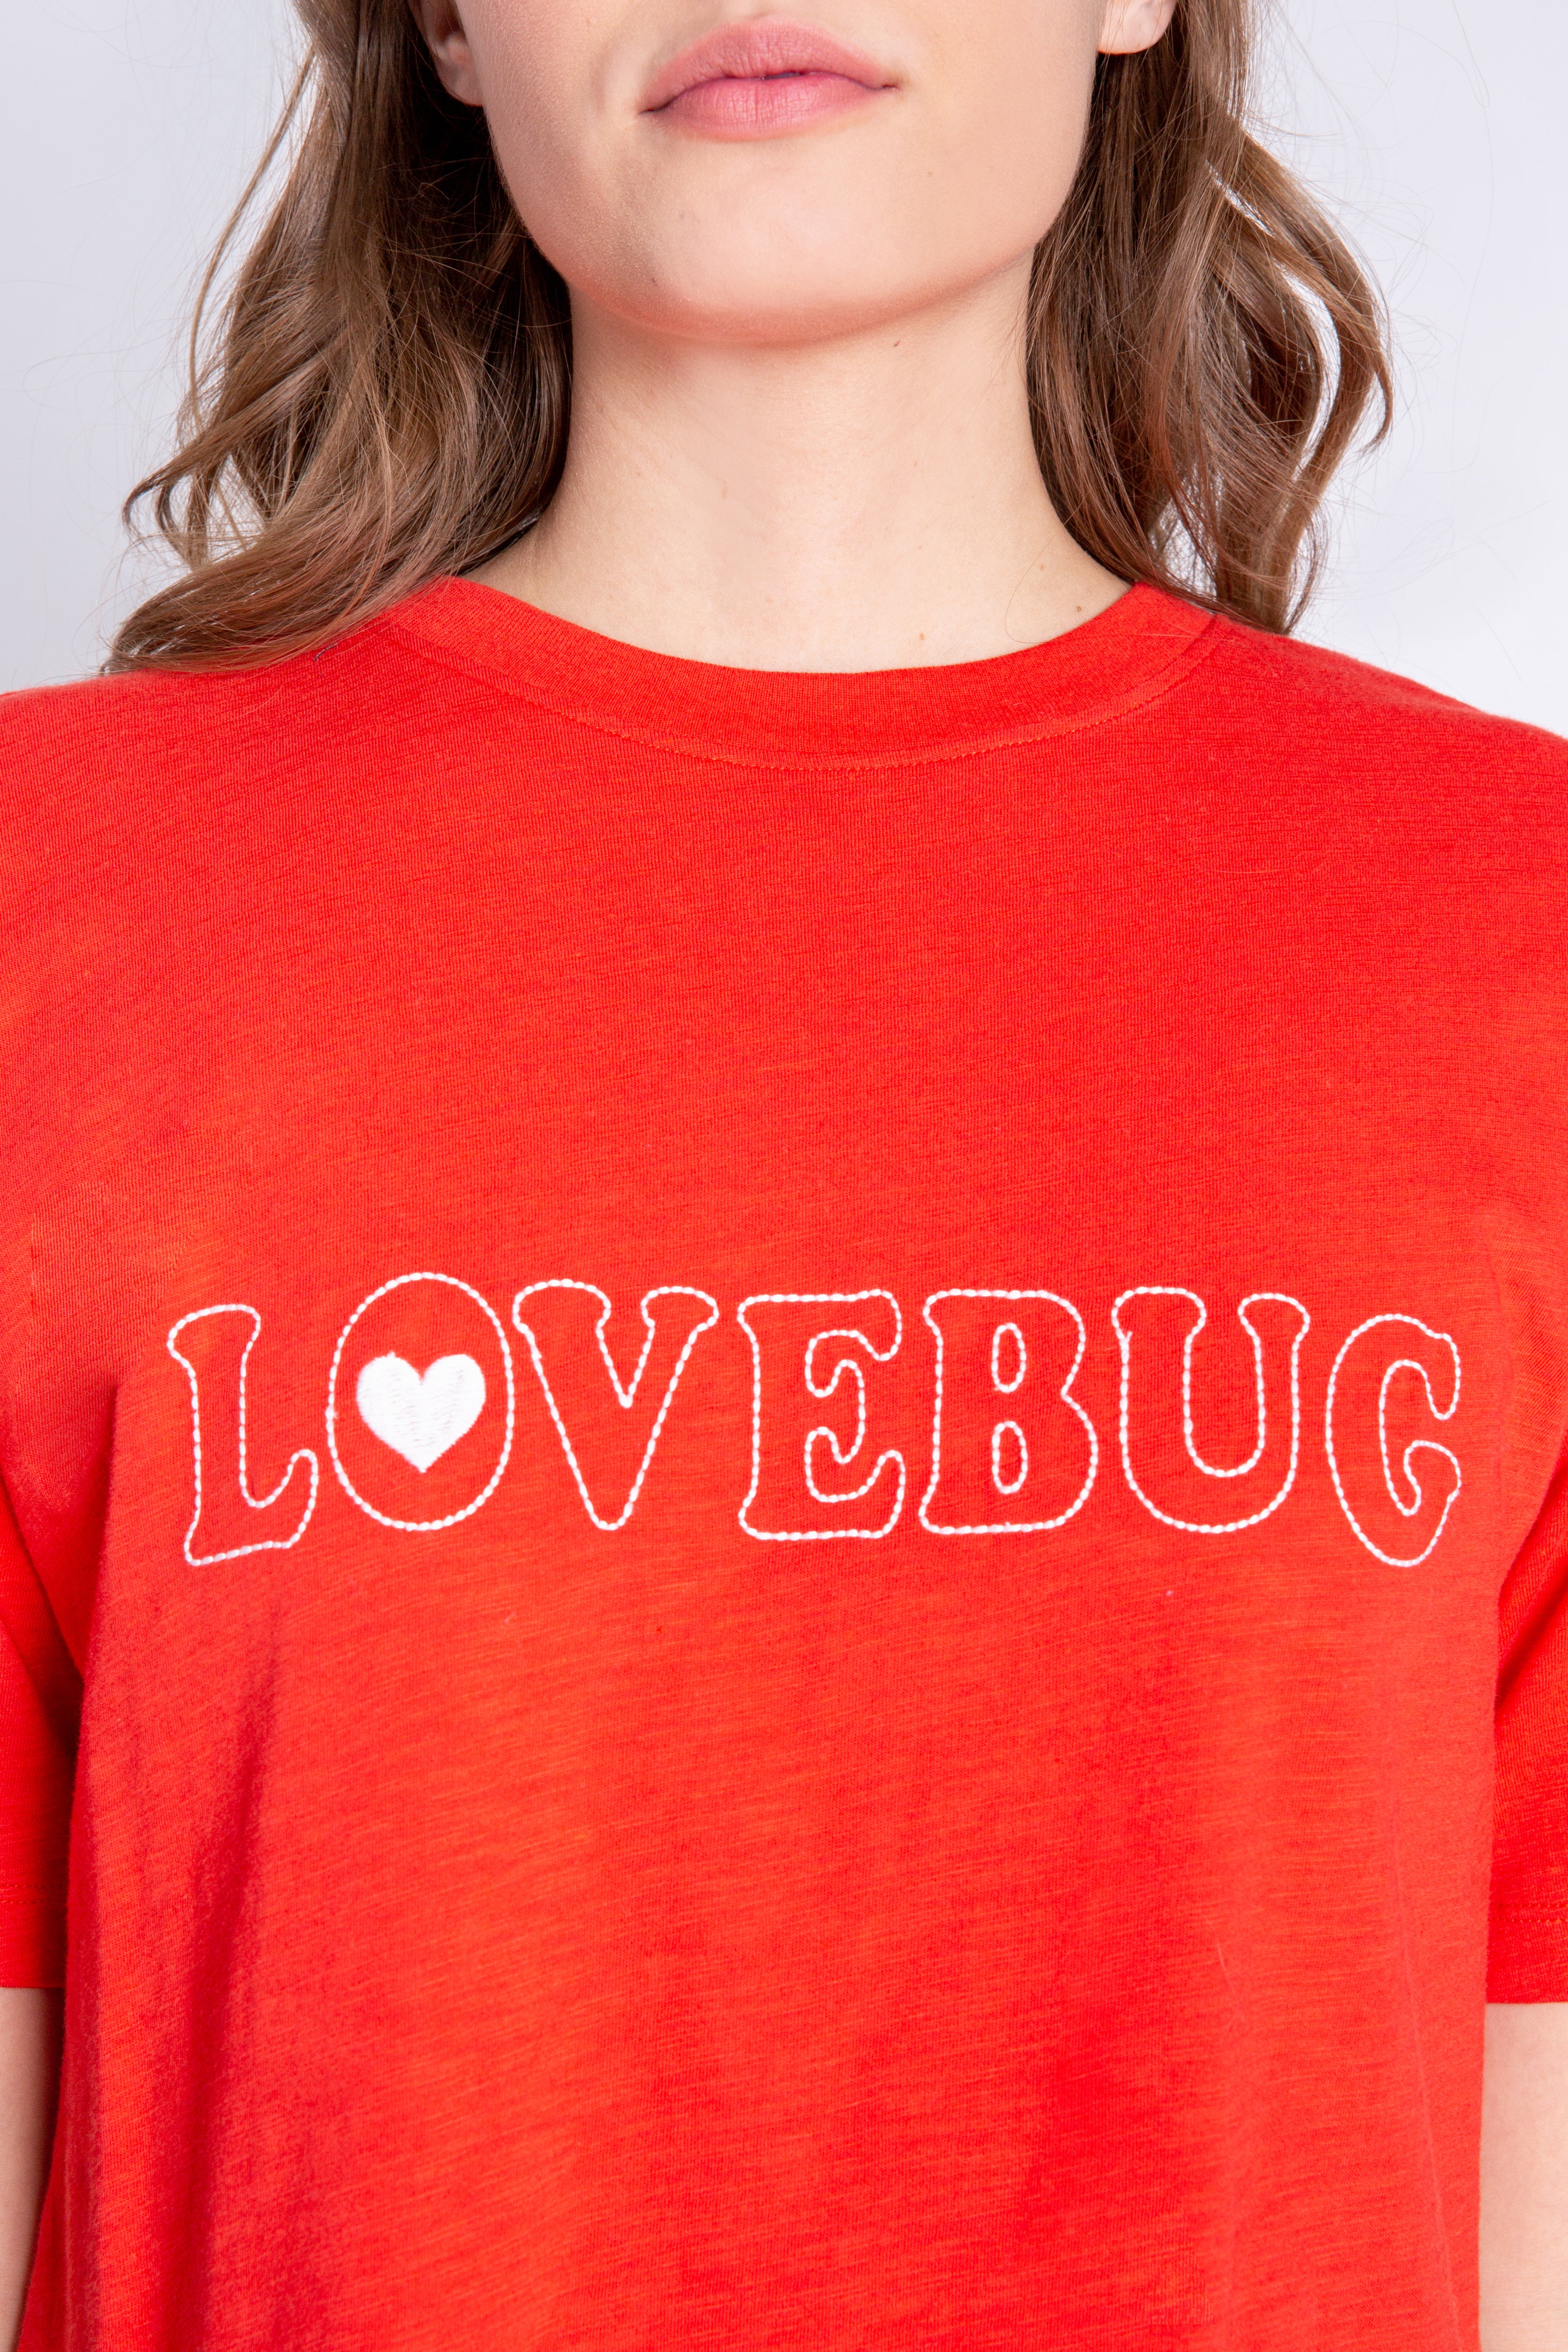 Lovebug Short Sleeve Tee